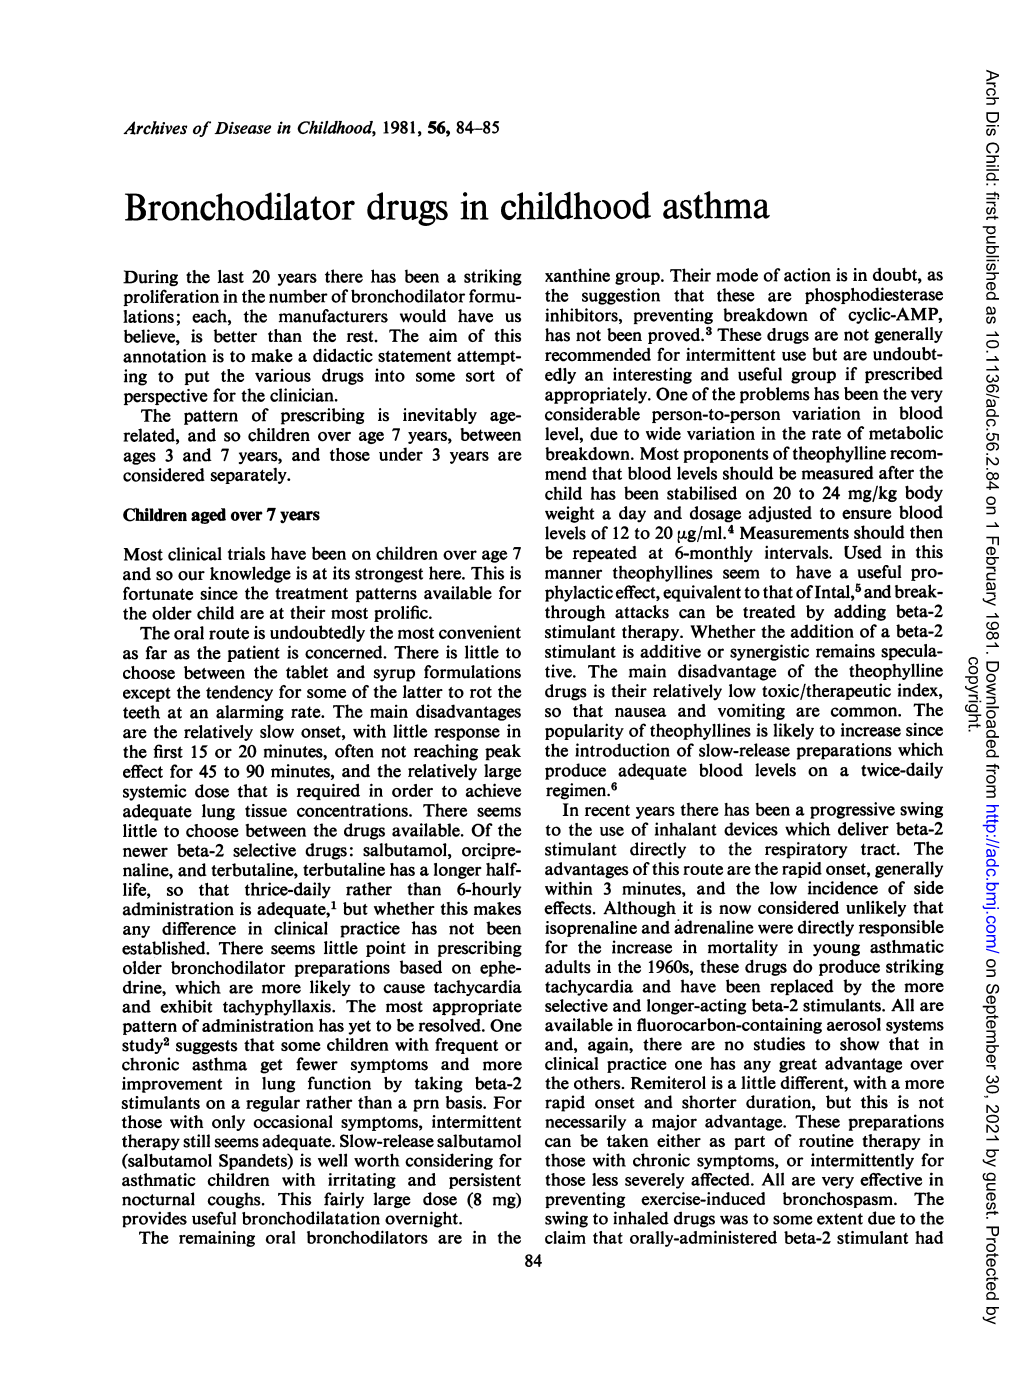 Bronchodilator Drugs in Childhood Asthma